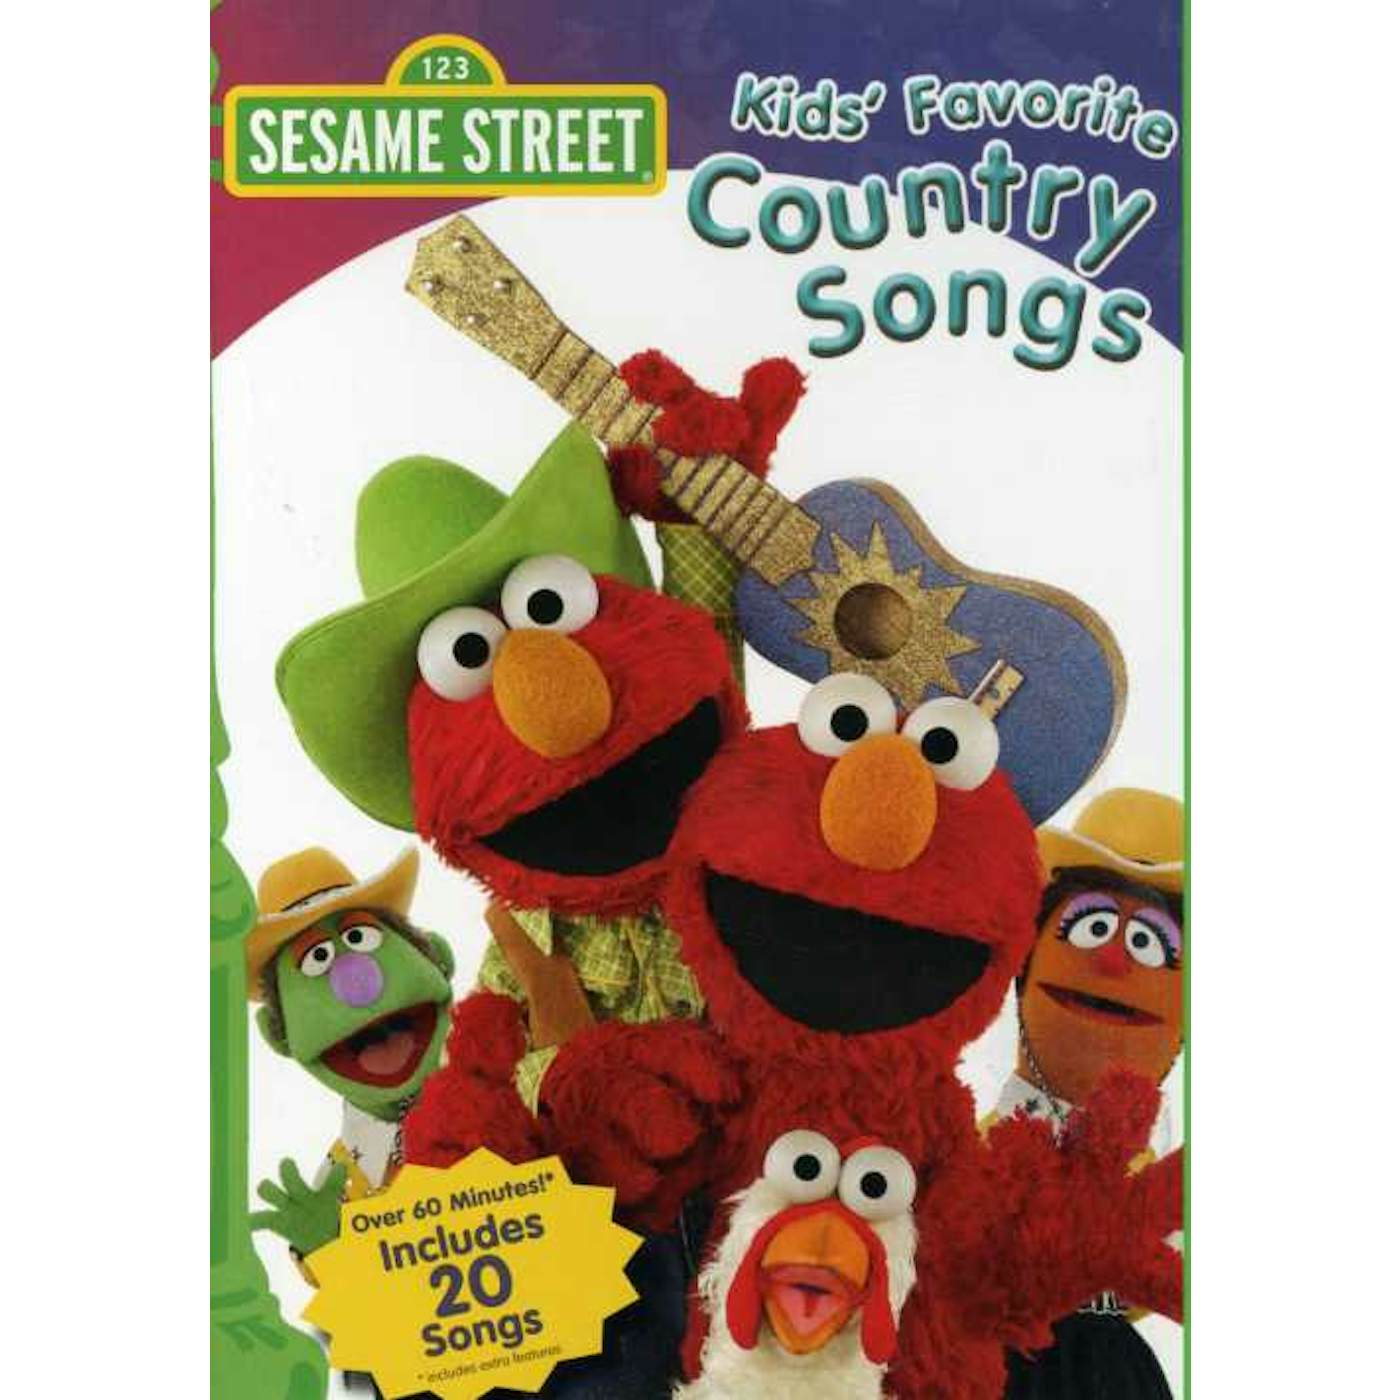 Sesame Street KIDS FAVORITE COUNTRY SONGS DVD